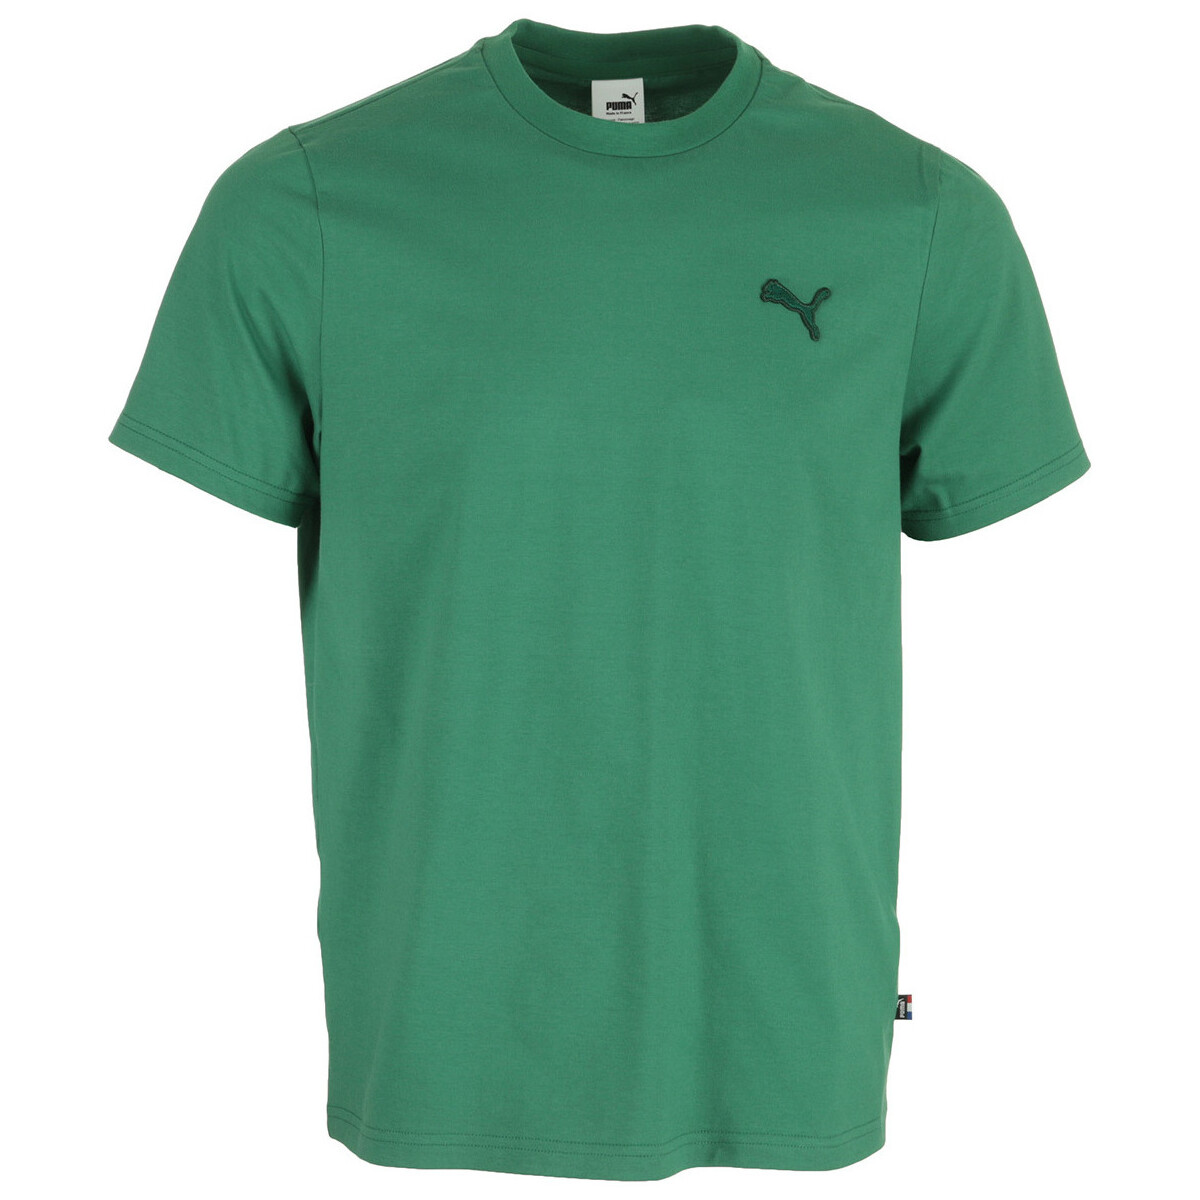 Abbigliamento Uomo T-shirt maniche corte Puma Fd Mif Tee Shirt Vine Verde